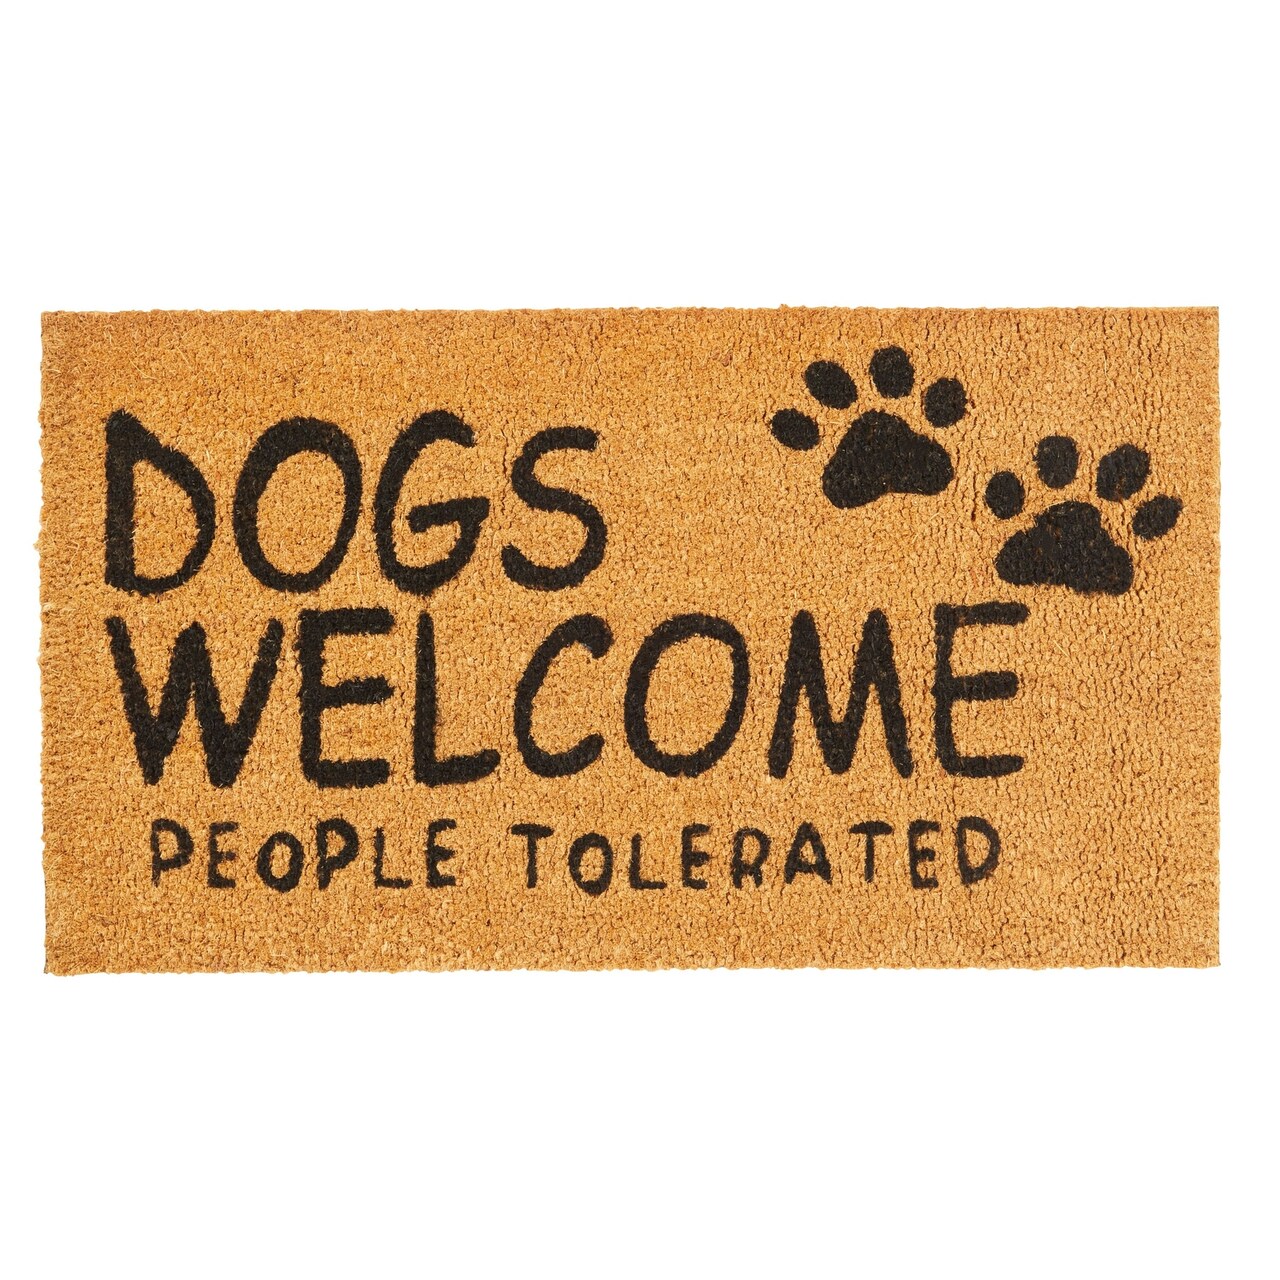 Dog Coir Doormat, Dogs Welcome People Tolerated, Natural Outdoor Door Mat  for Porch (30 x 17 In)